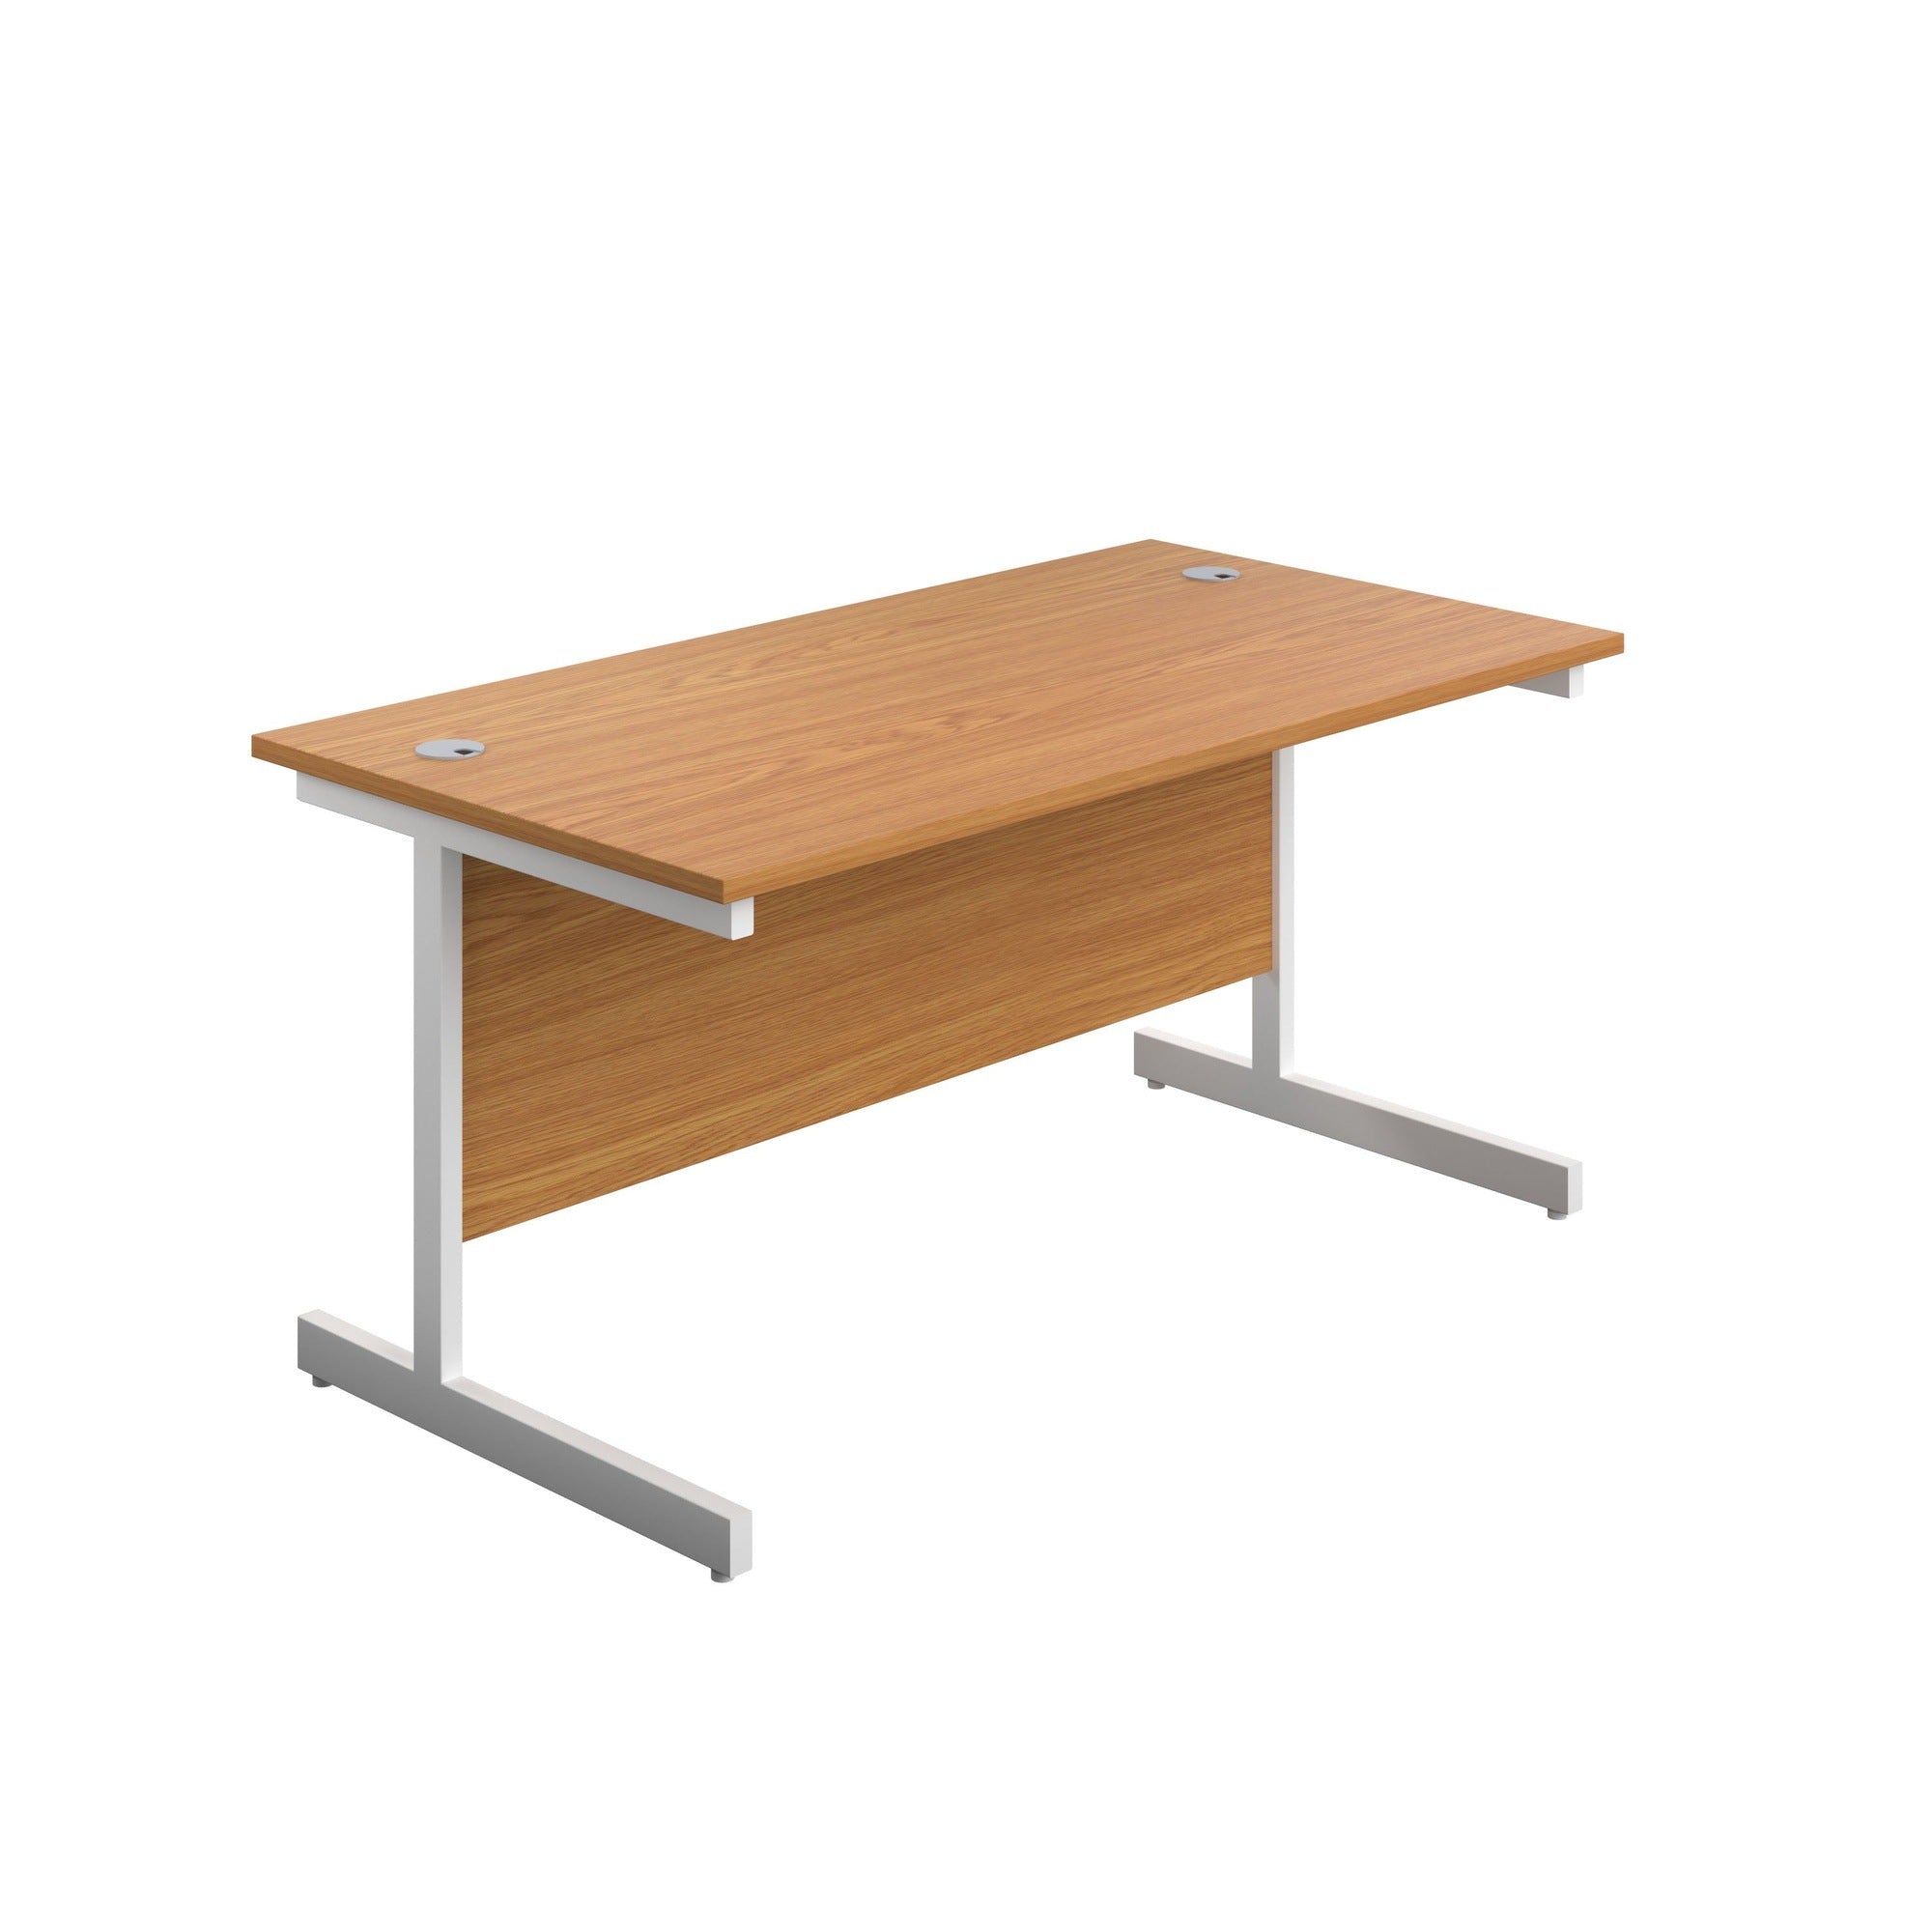 Single Upright Straight 1400mm Desk & Mobile Pedestal